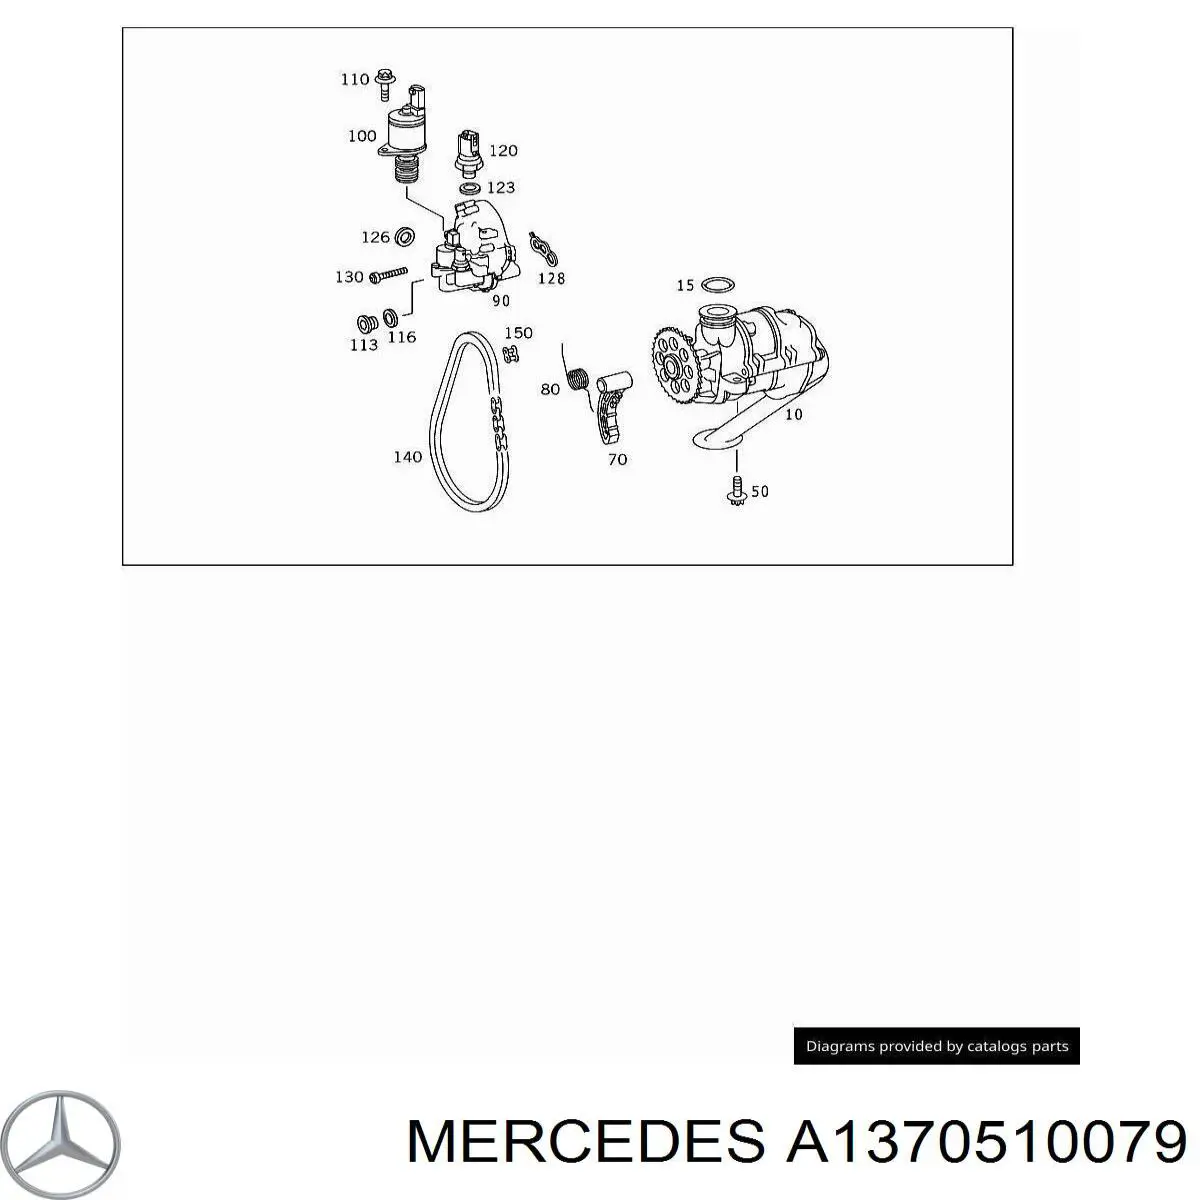 A1370510079 Mercedes 